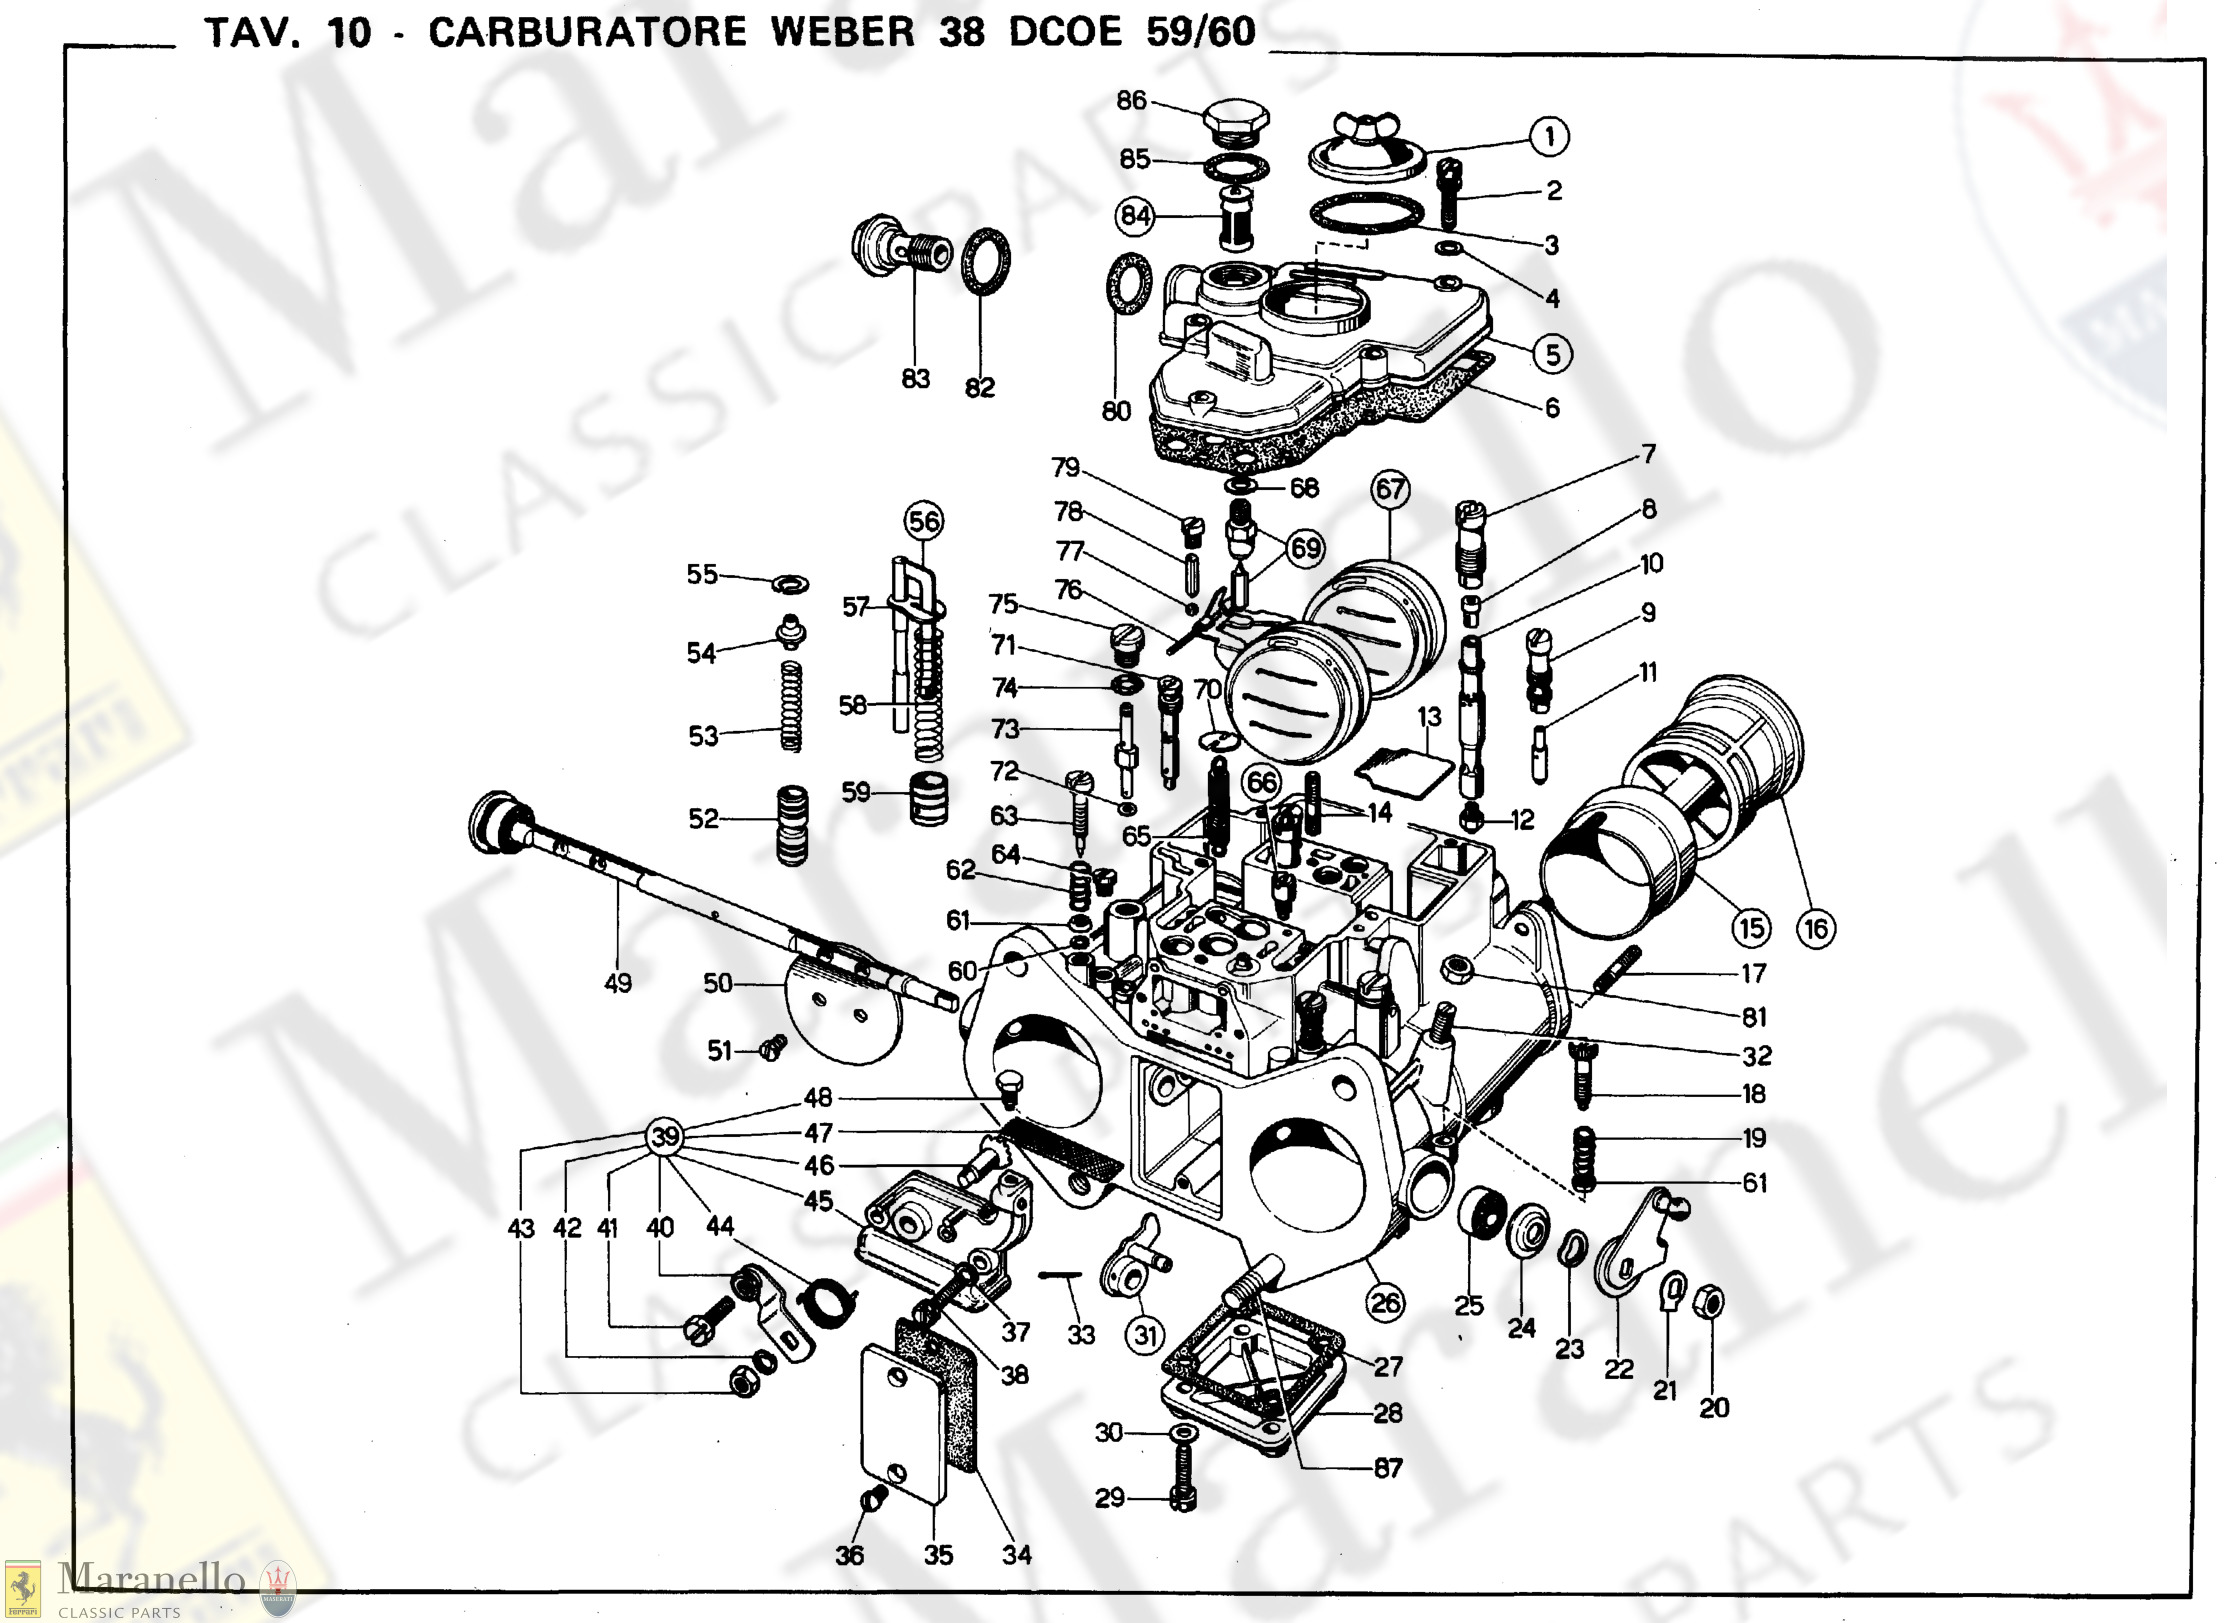 010 - Weber 38 NDCOE 59/60 Carburettor